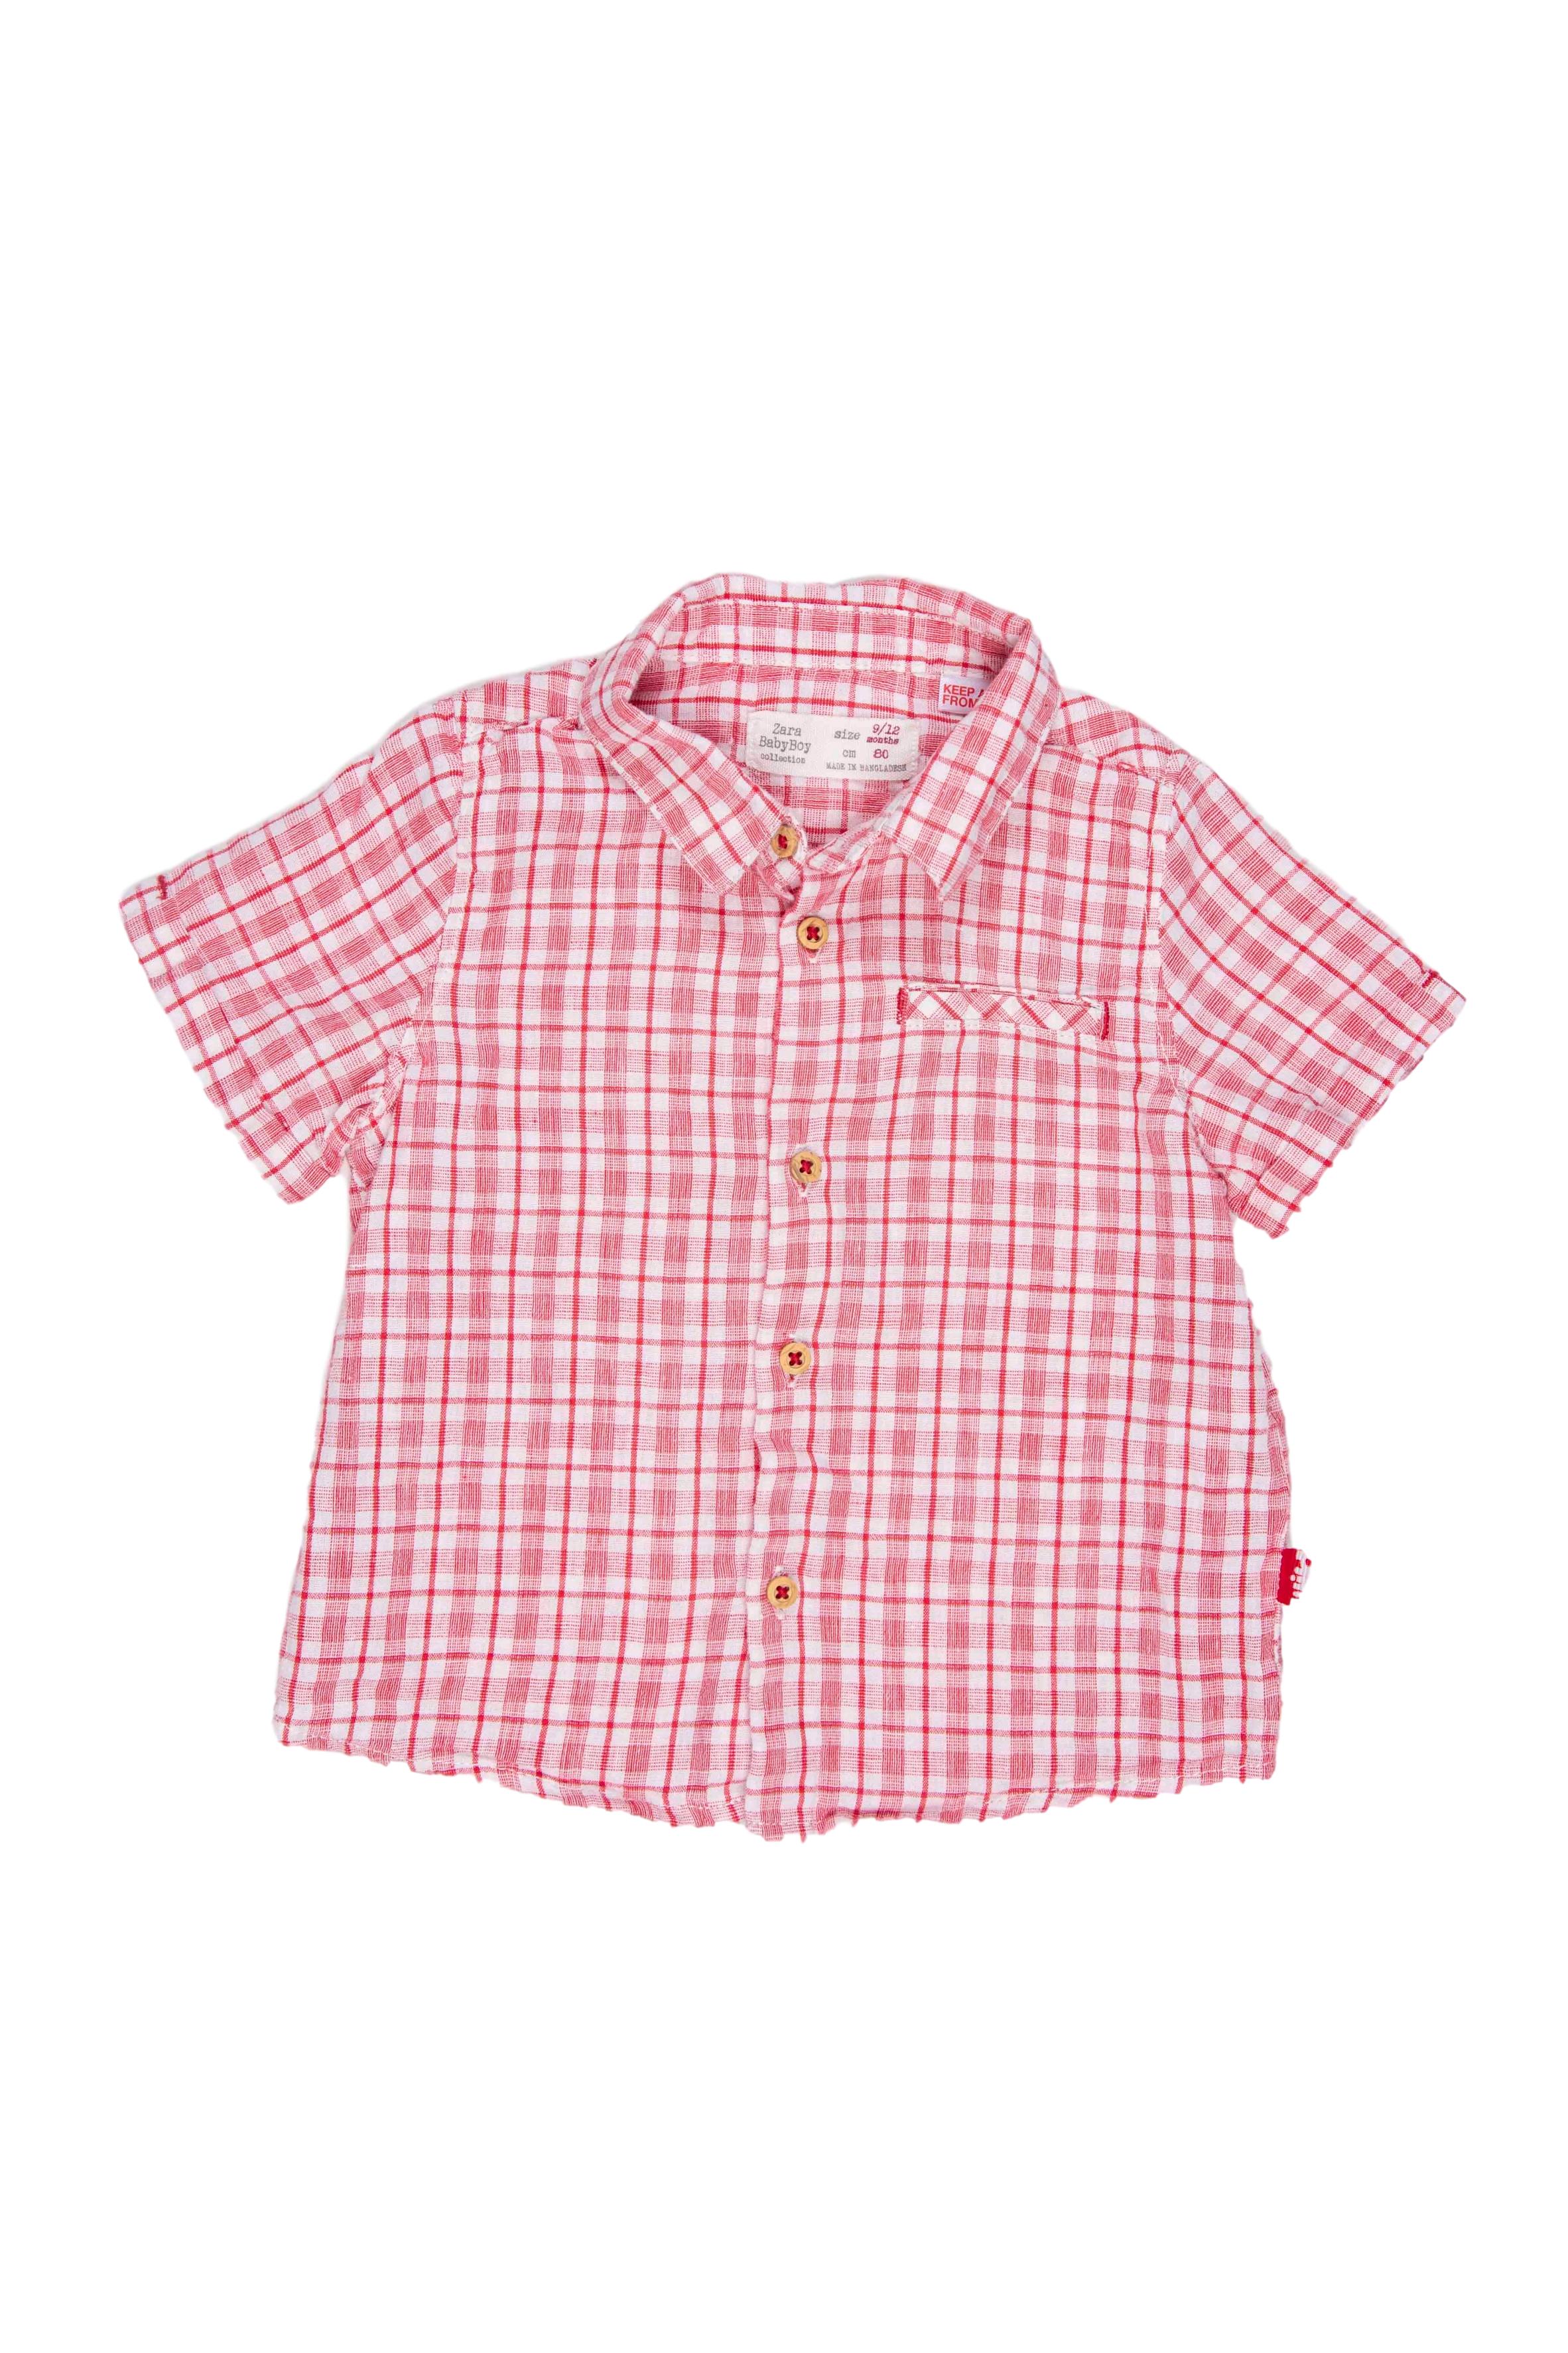 Camisa manga corta cuadros rojos 71% algodón 29% lino - Zara